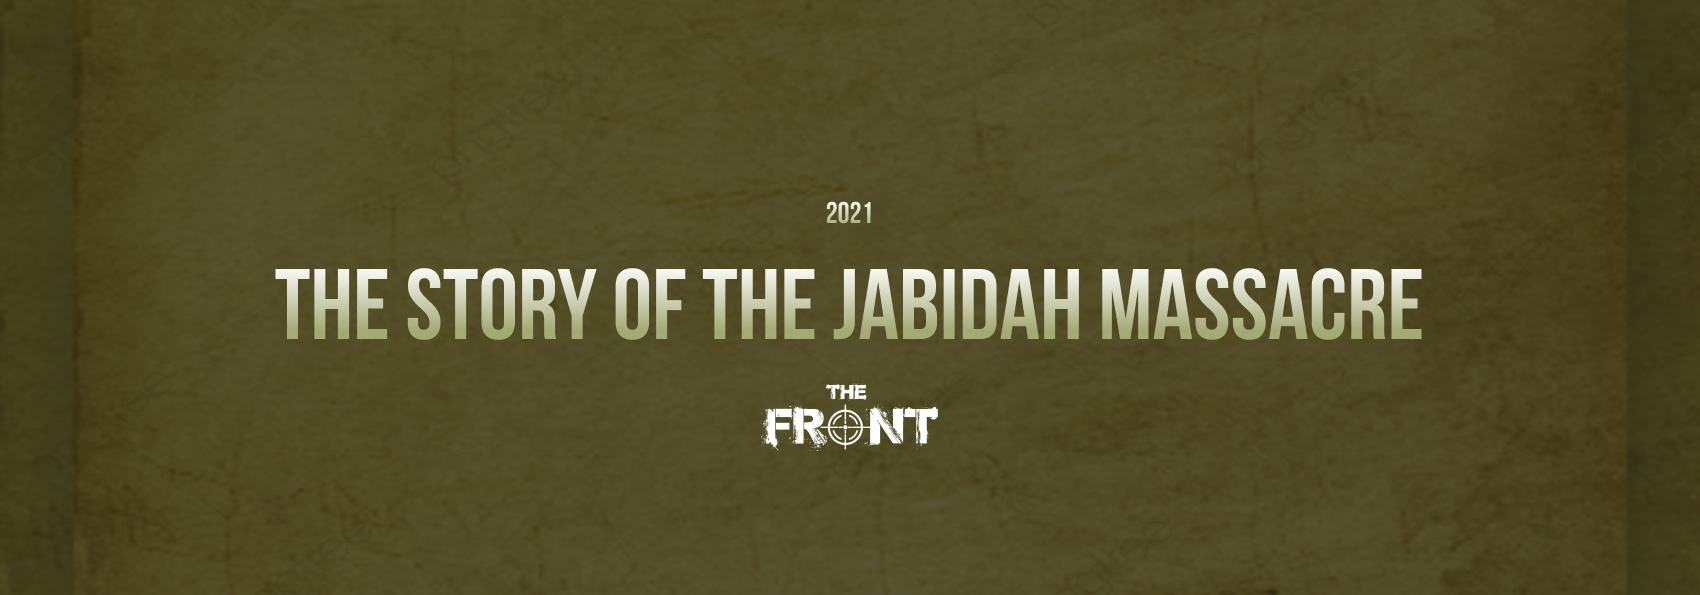 The Story of The Jabidah Massacre